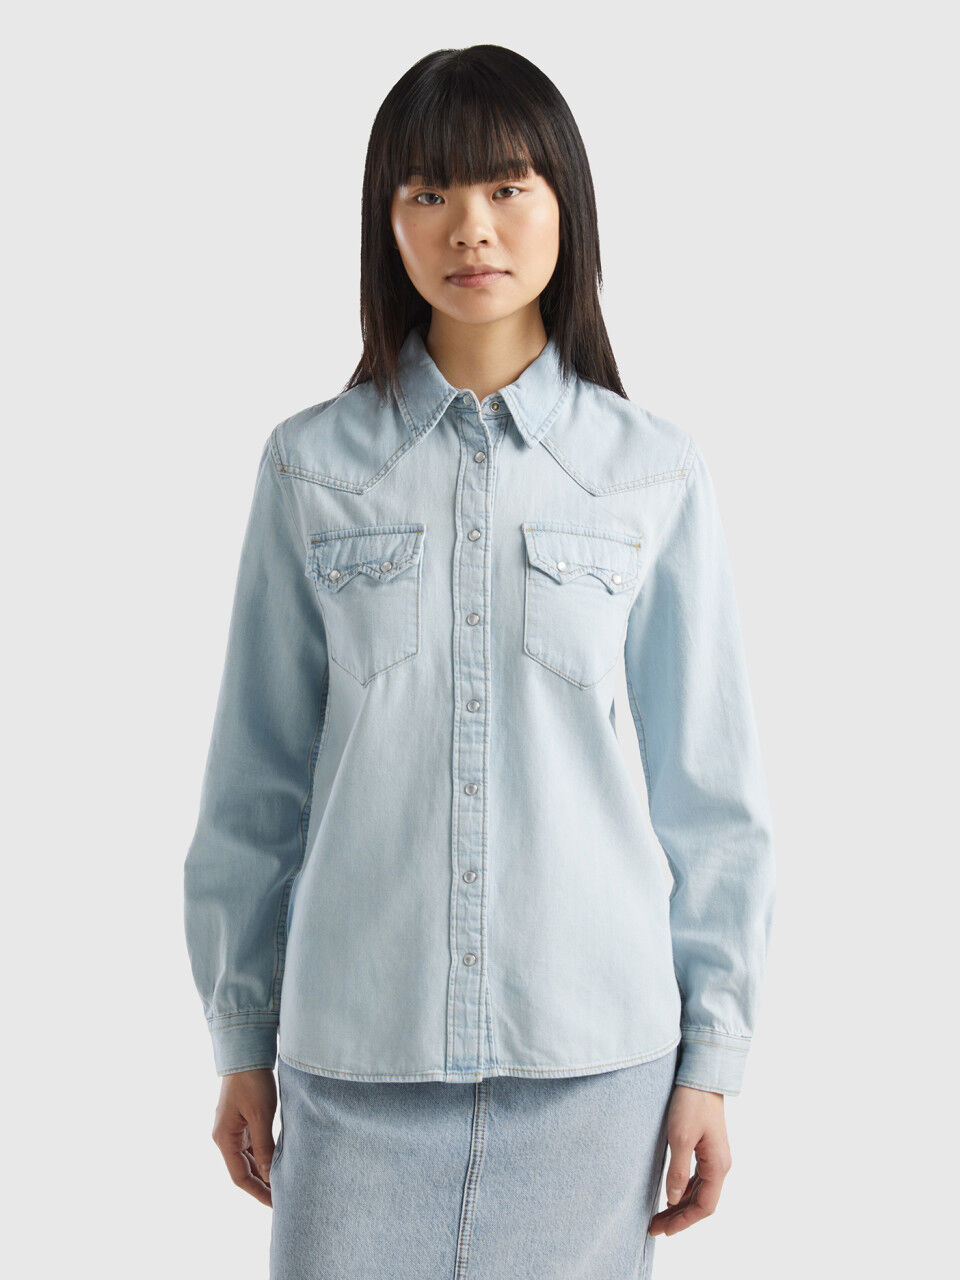 Buy Lady Bird Women Long Sleeve Denim Shirt, Light Blue, Large Size at  Amazon.in